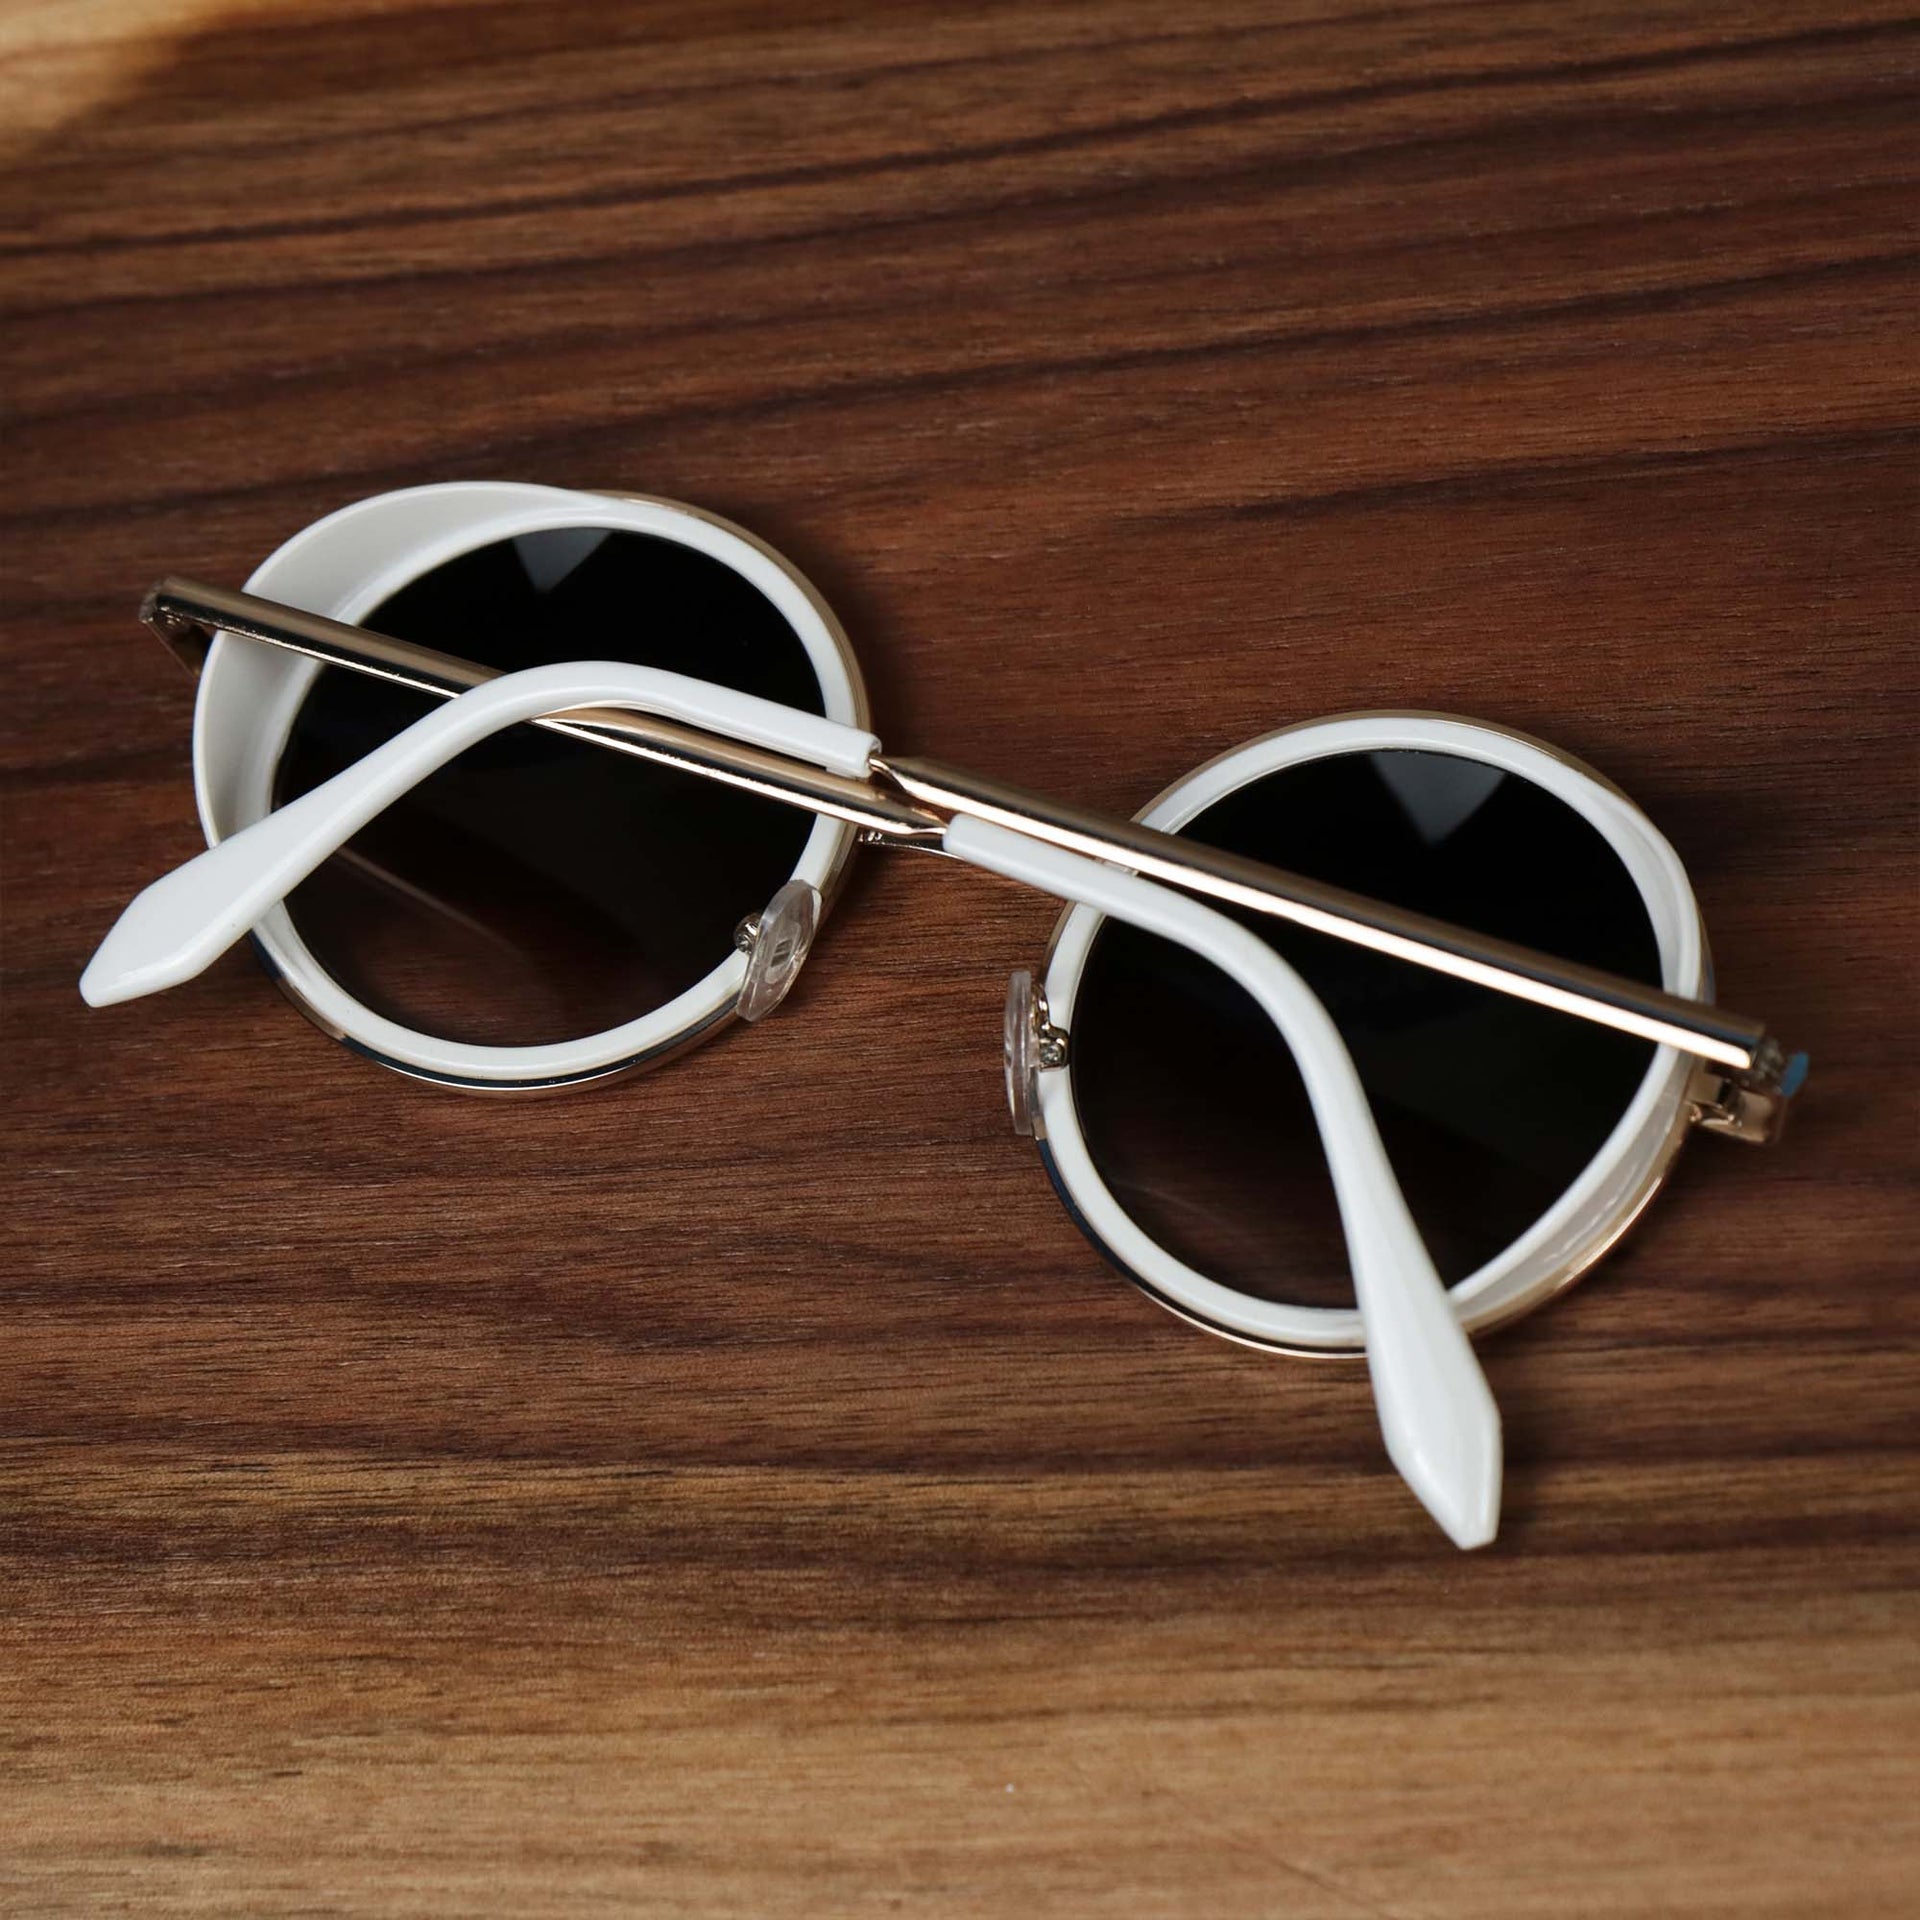 The Circle Frame Black Lens Sunglasses with White Frame folded up